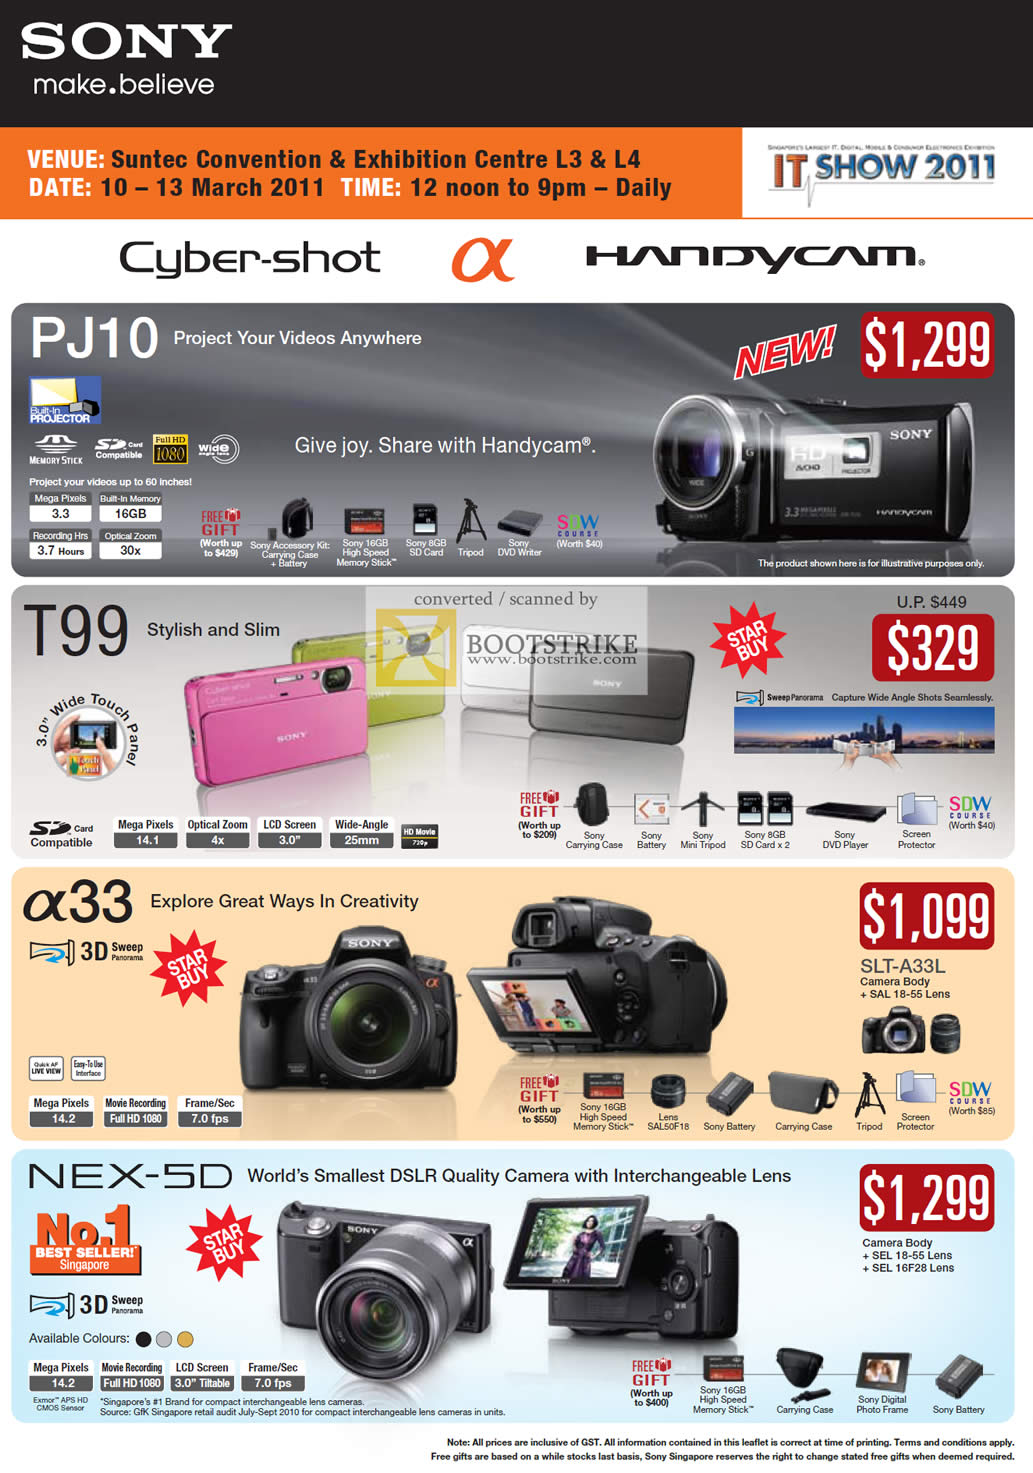 IT Show 2011 price list image brochure of Sony Digital Cameras Cybershot Alpha Handycam PJ10 T99 A33 NEX-5D DSLR